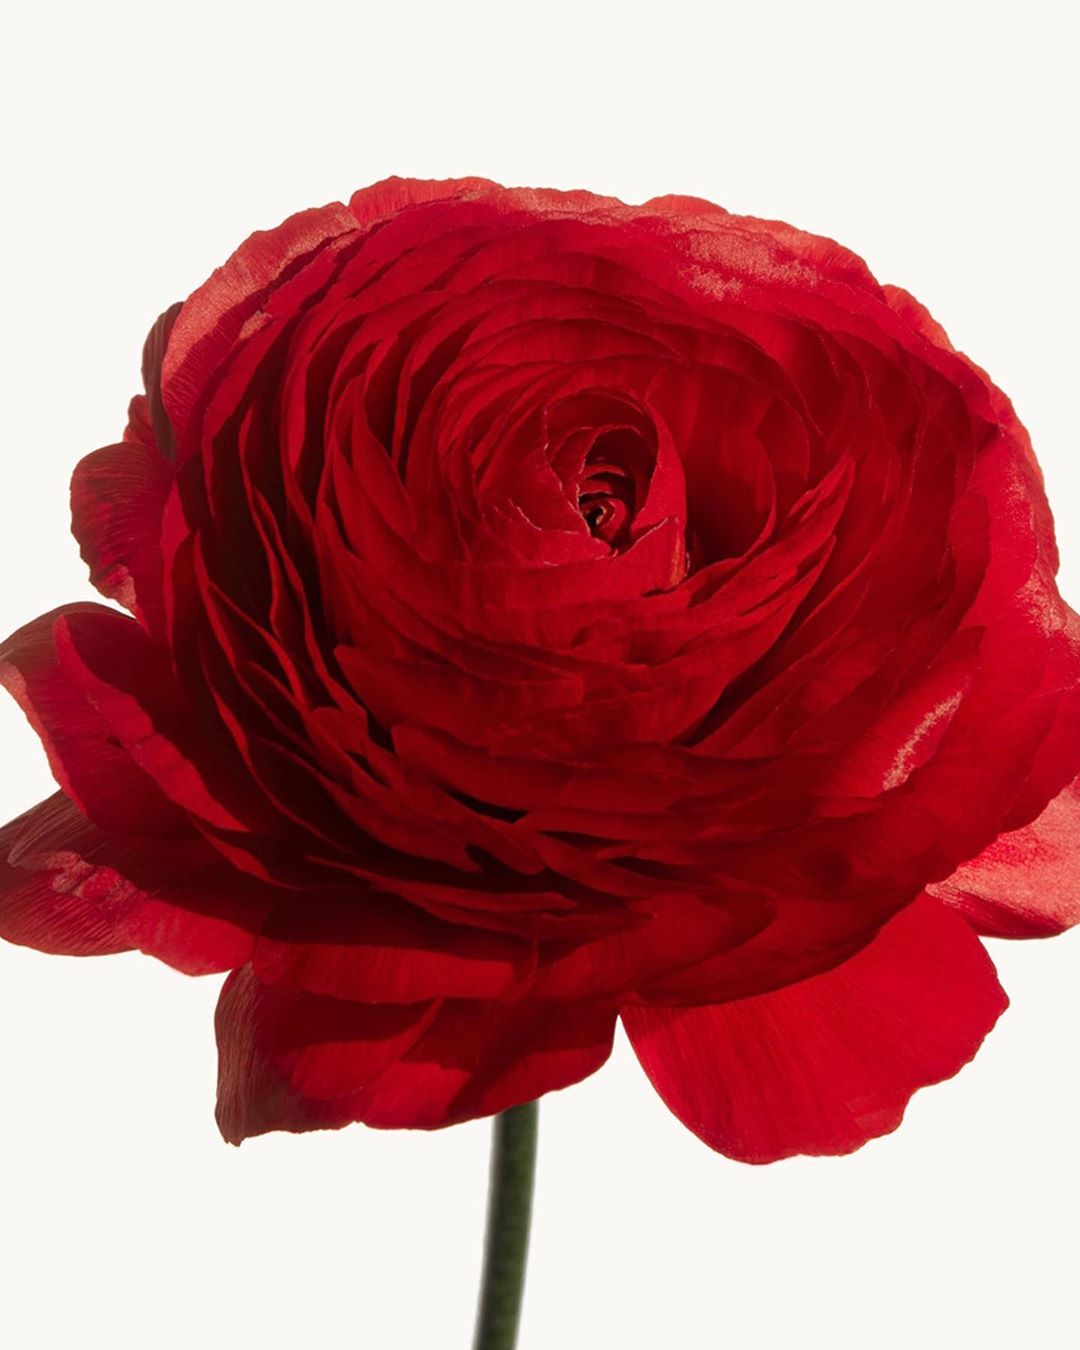 narciso rodriguez - NARCISO eau de parfum rouge: Bulgarian rose and iris sensually envelop a heart of musc.
#myrouge #narcisorouge #narcisorodriguezparfums #parfum #fragrance